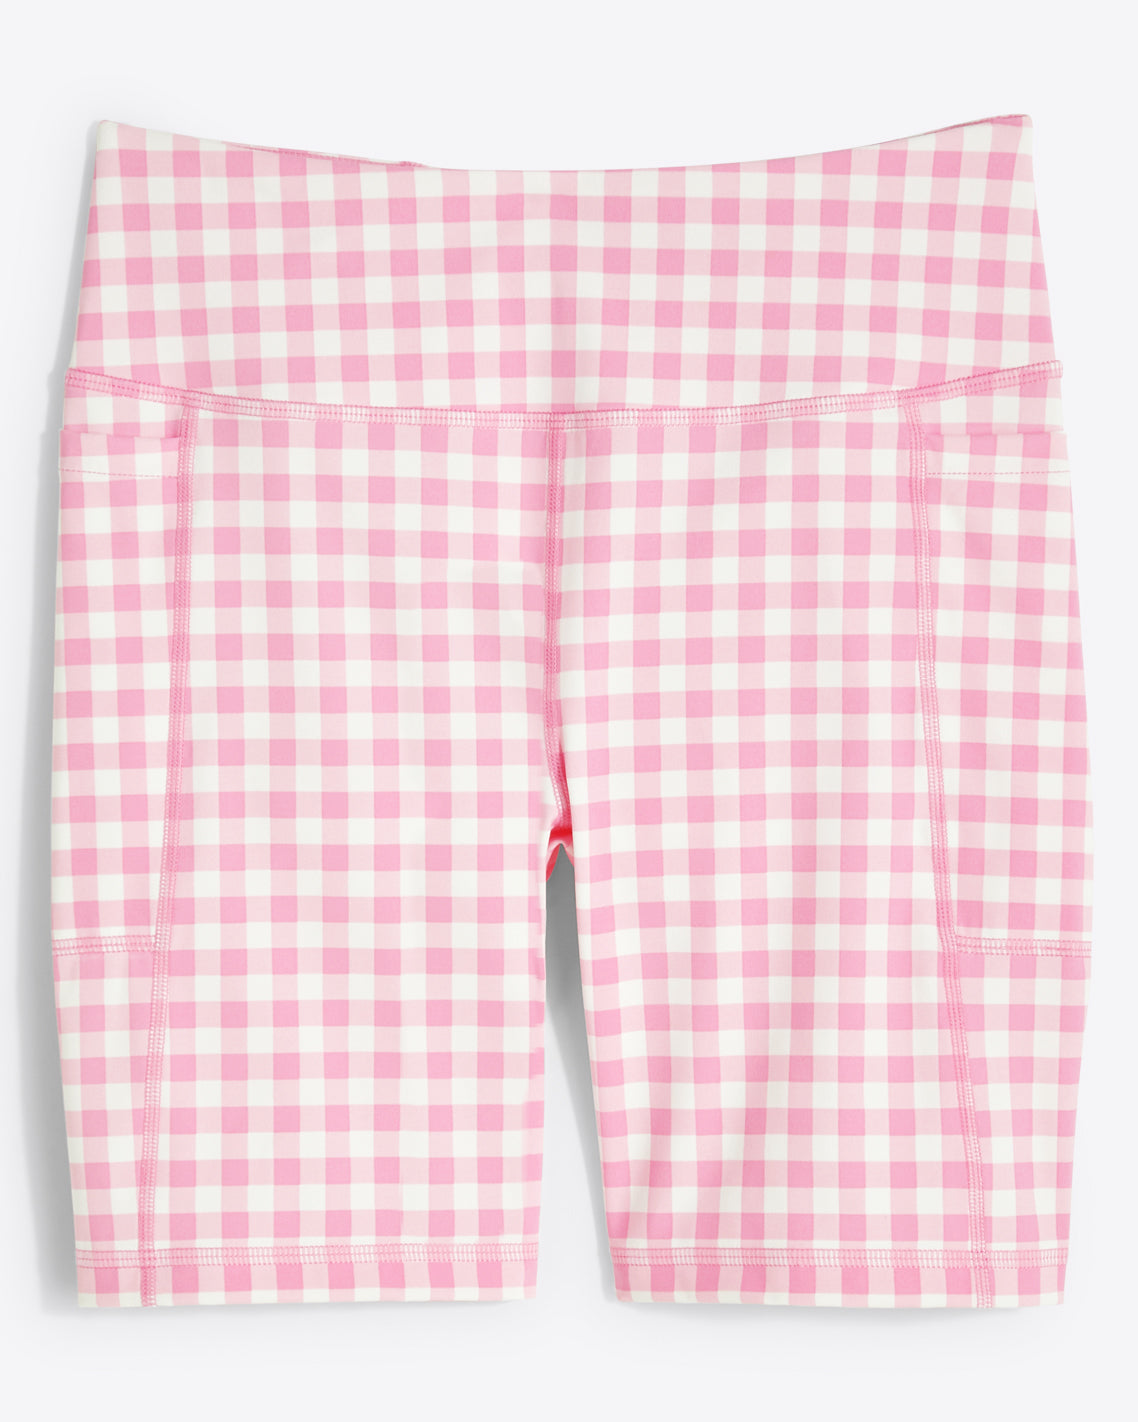 Bike Shorts in Pink Gingham